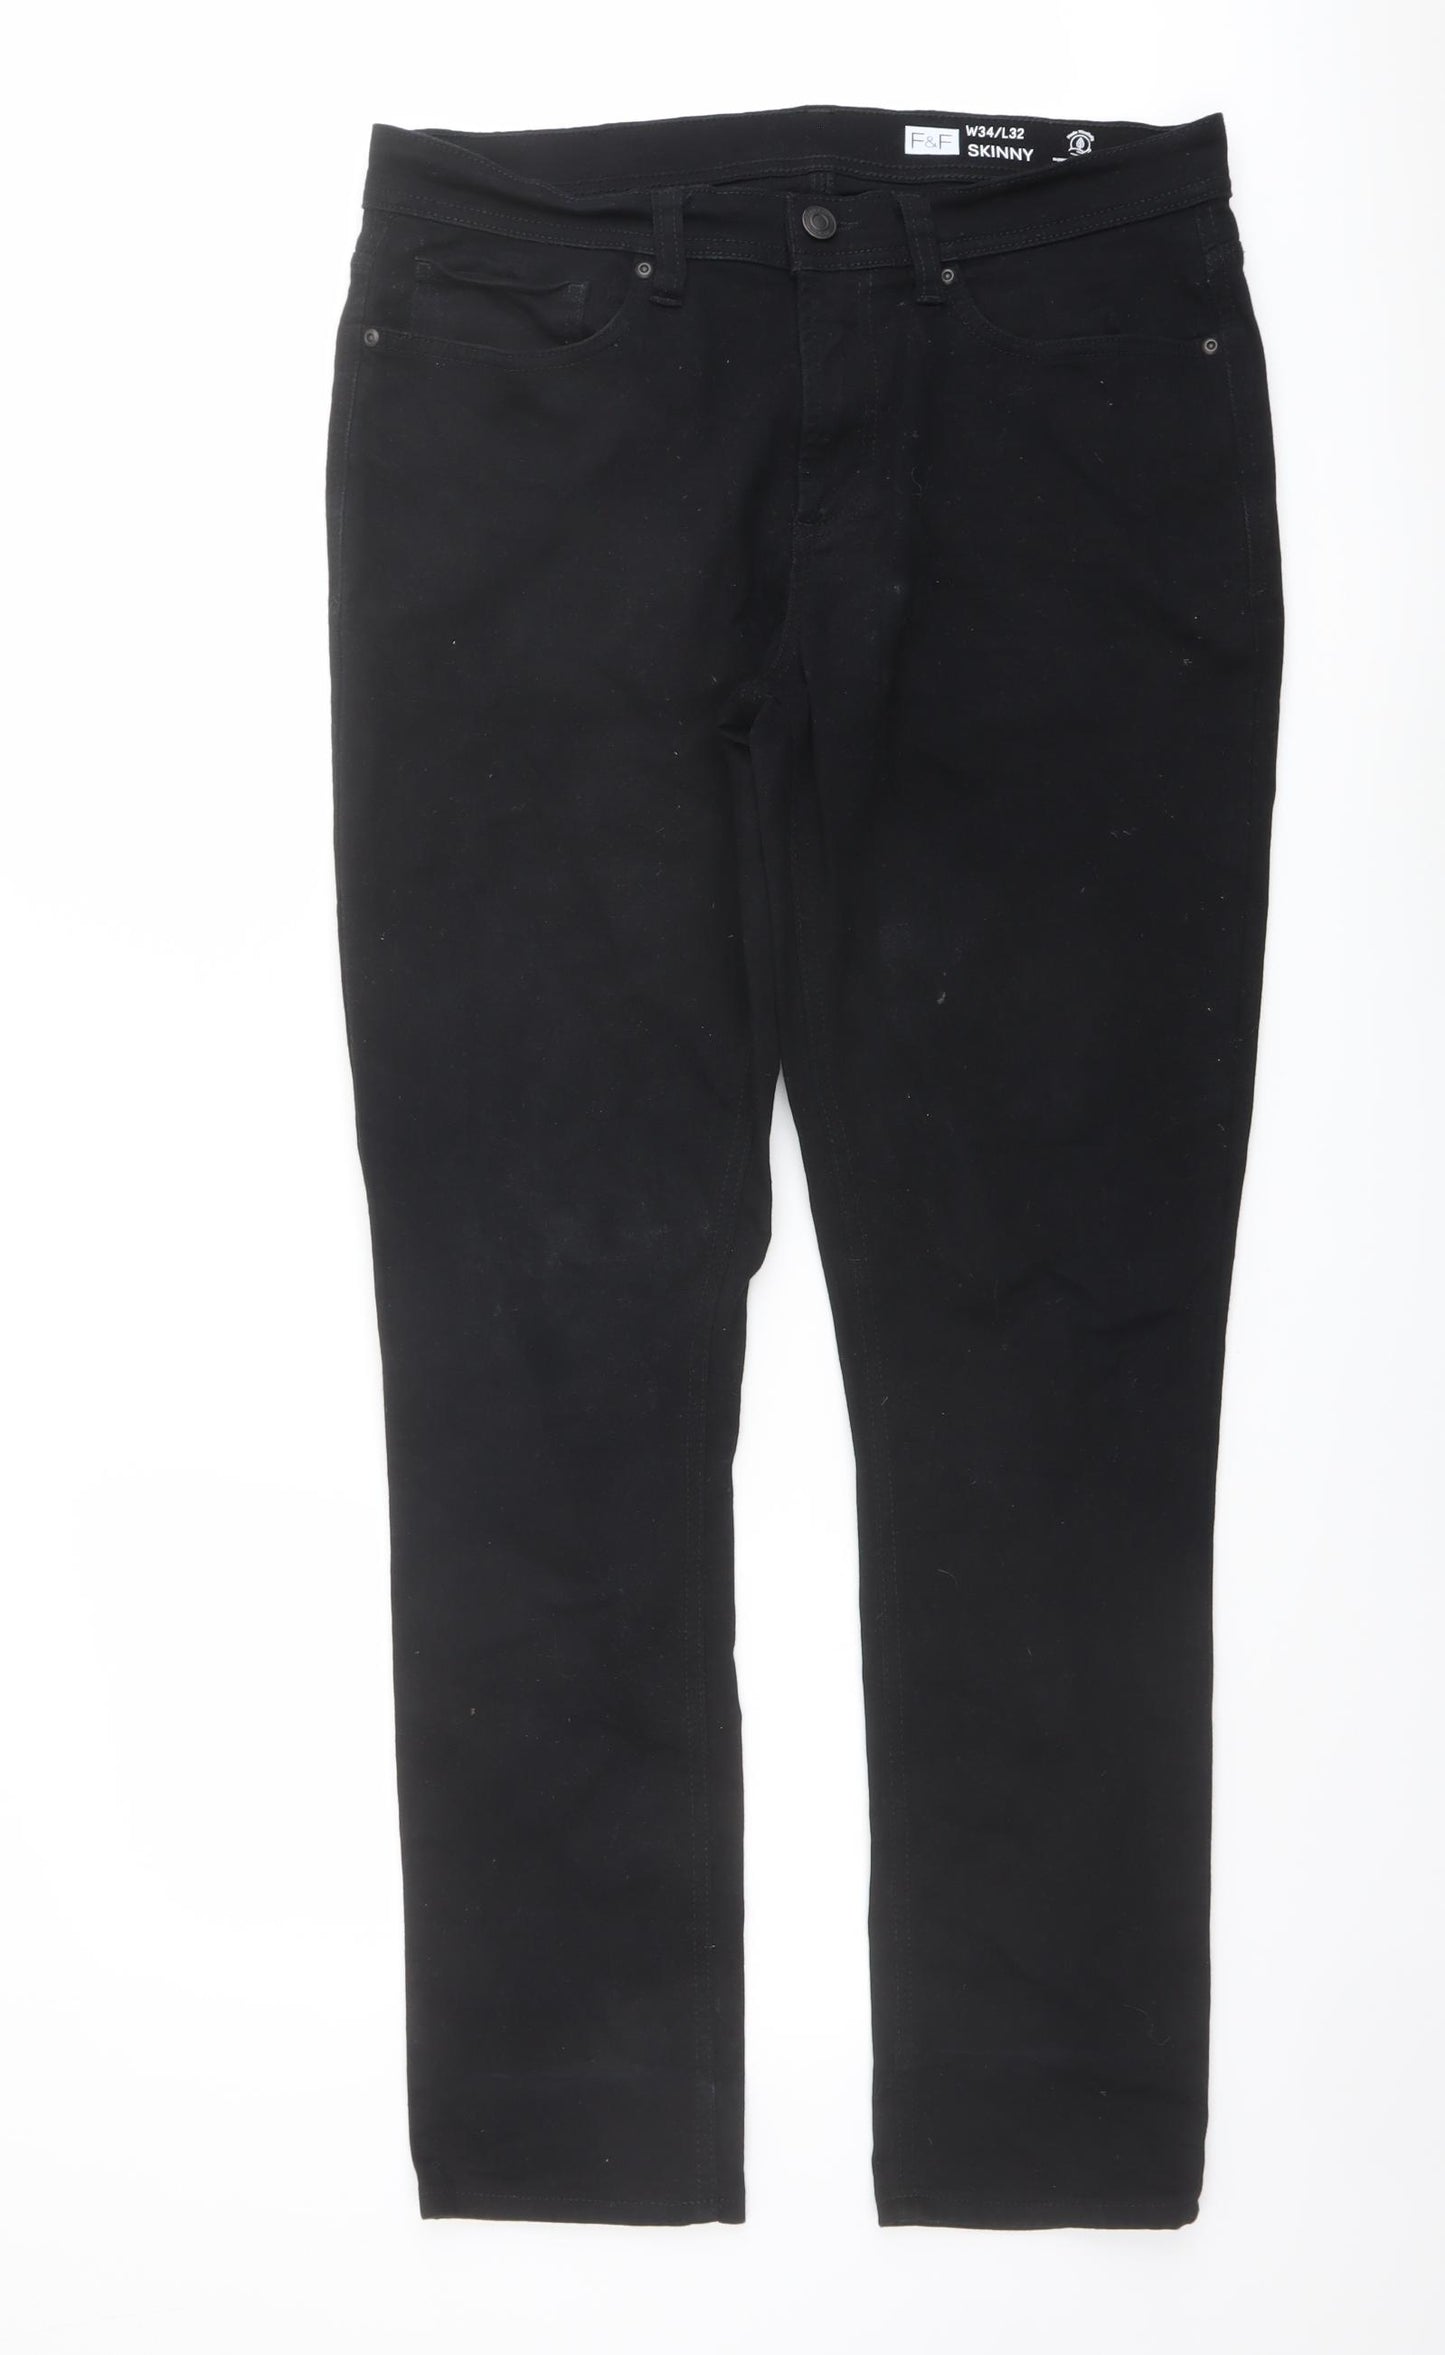 F&F Mens Black Cotton Skinny Jeans Size 34 in L32 in Regular Button